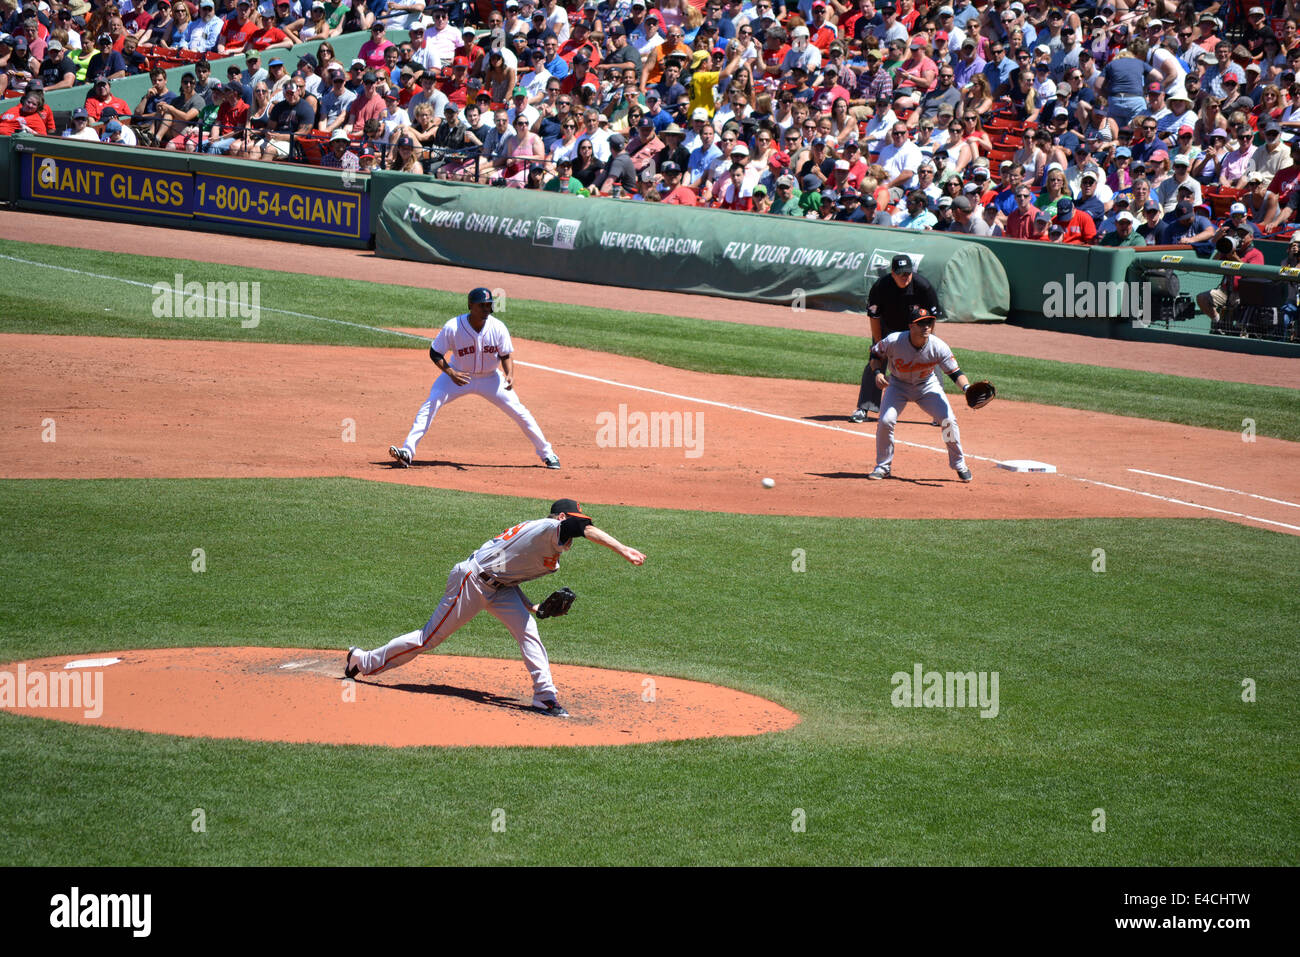 Major League Baseball game at Fenway Park in Boston. Stock Photo